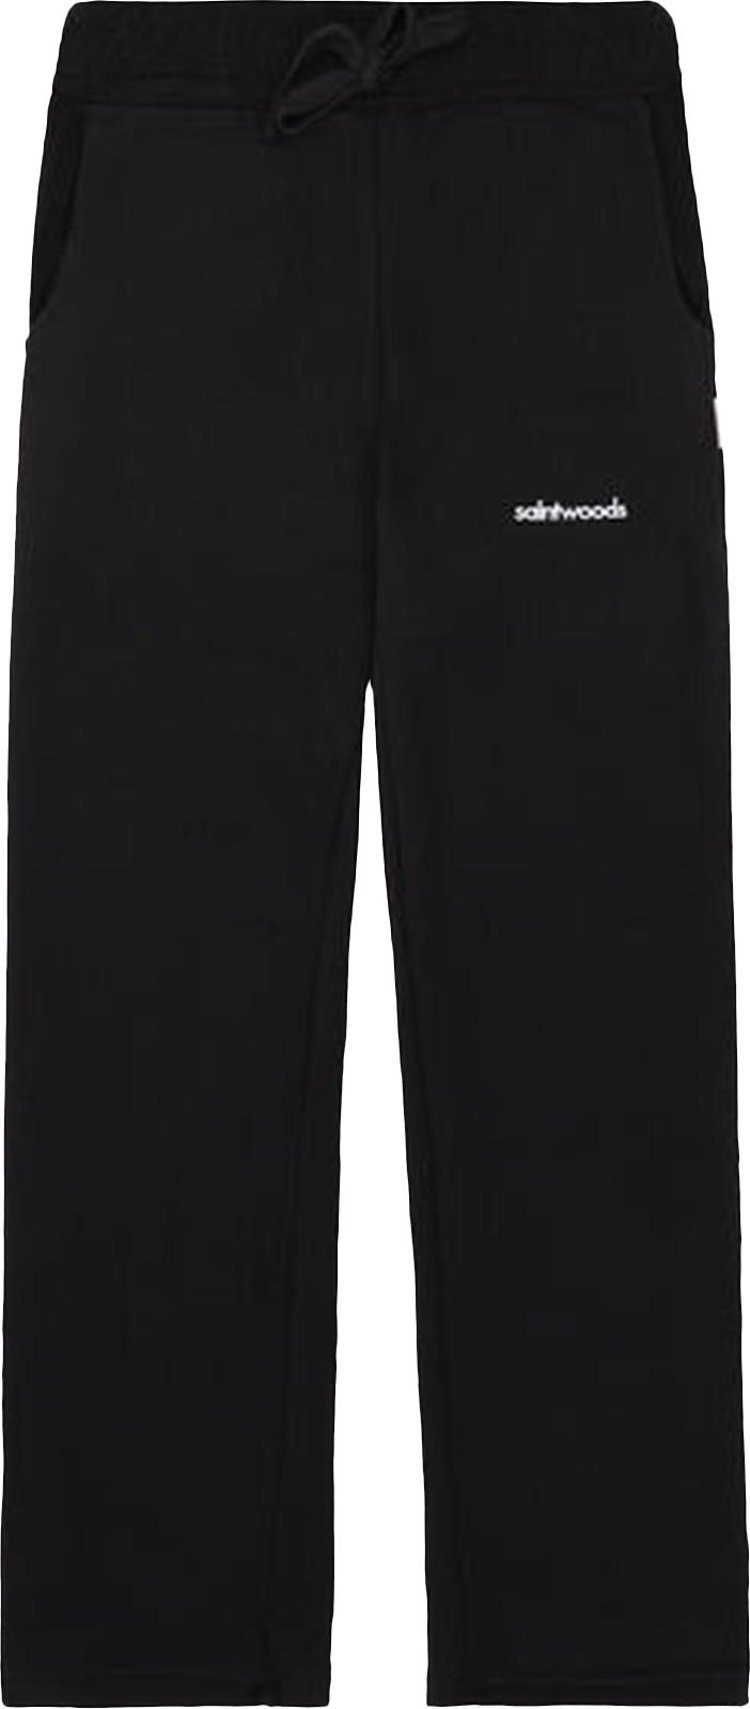 Saintwoods Pants 'Black'